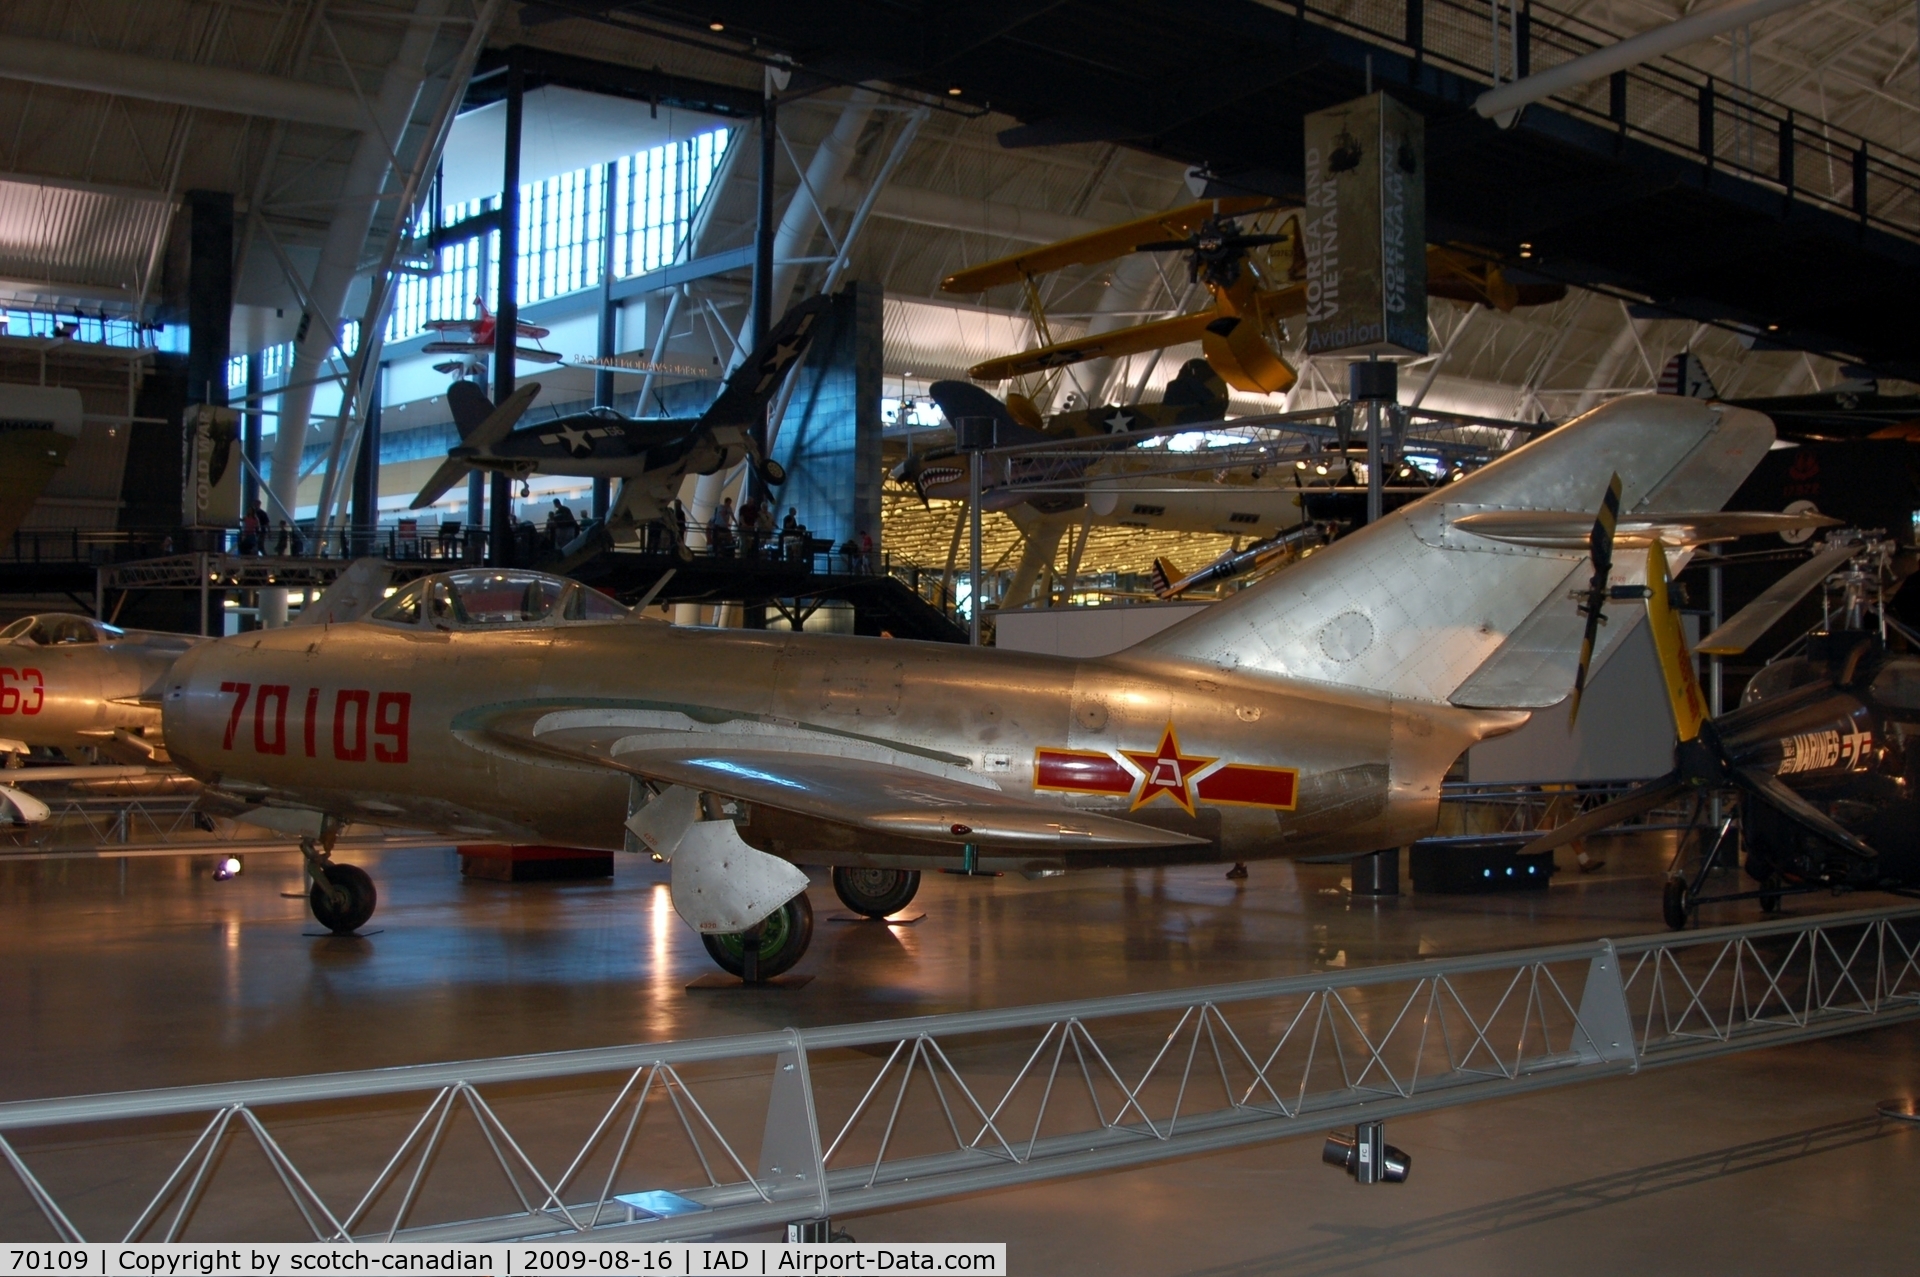 70109, Mikoyan-Gurevich MiG-15bis C/N 4320, Mikoyan-Gurevich MiG-15 (Ji-2) FAGOT B at the Steven F. Udvar-Hazy Center, Smithsonian National Air and Space Museum, Chantilly, VA